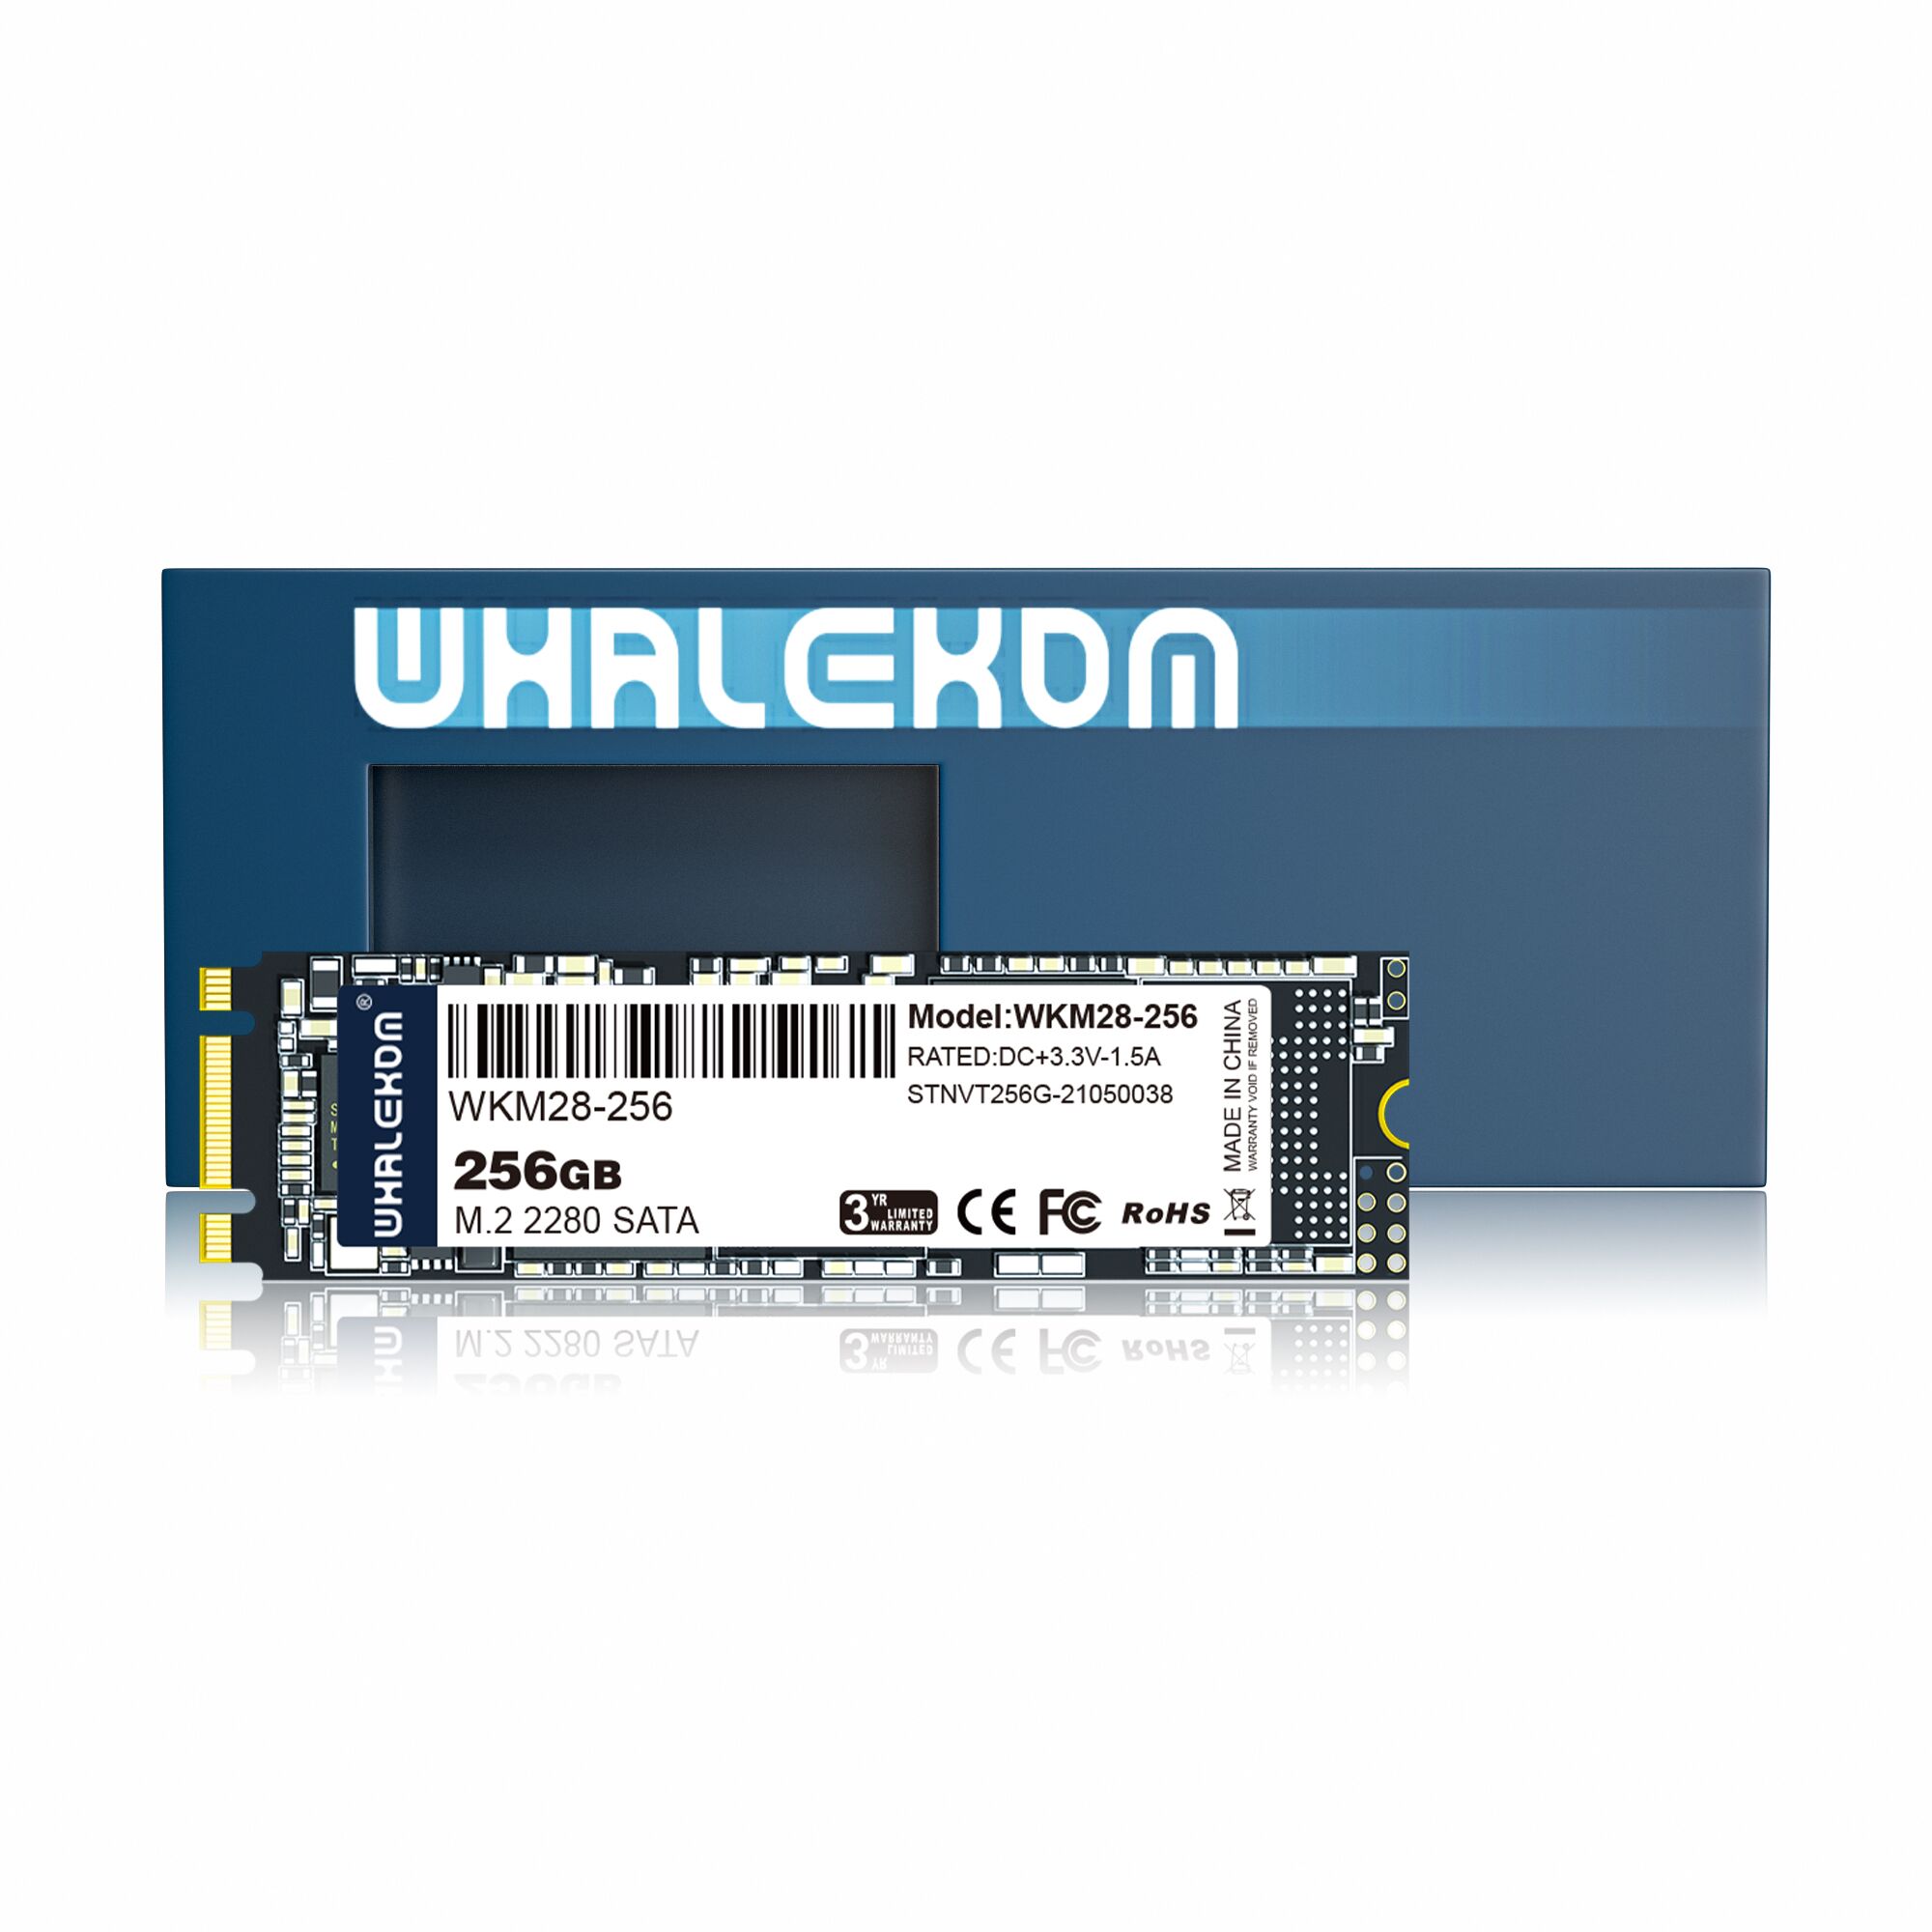 WKM28 - M.2 SATA 2280 SSD - 256GB Solid State Drive -